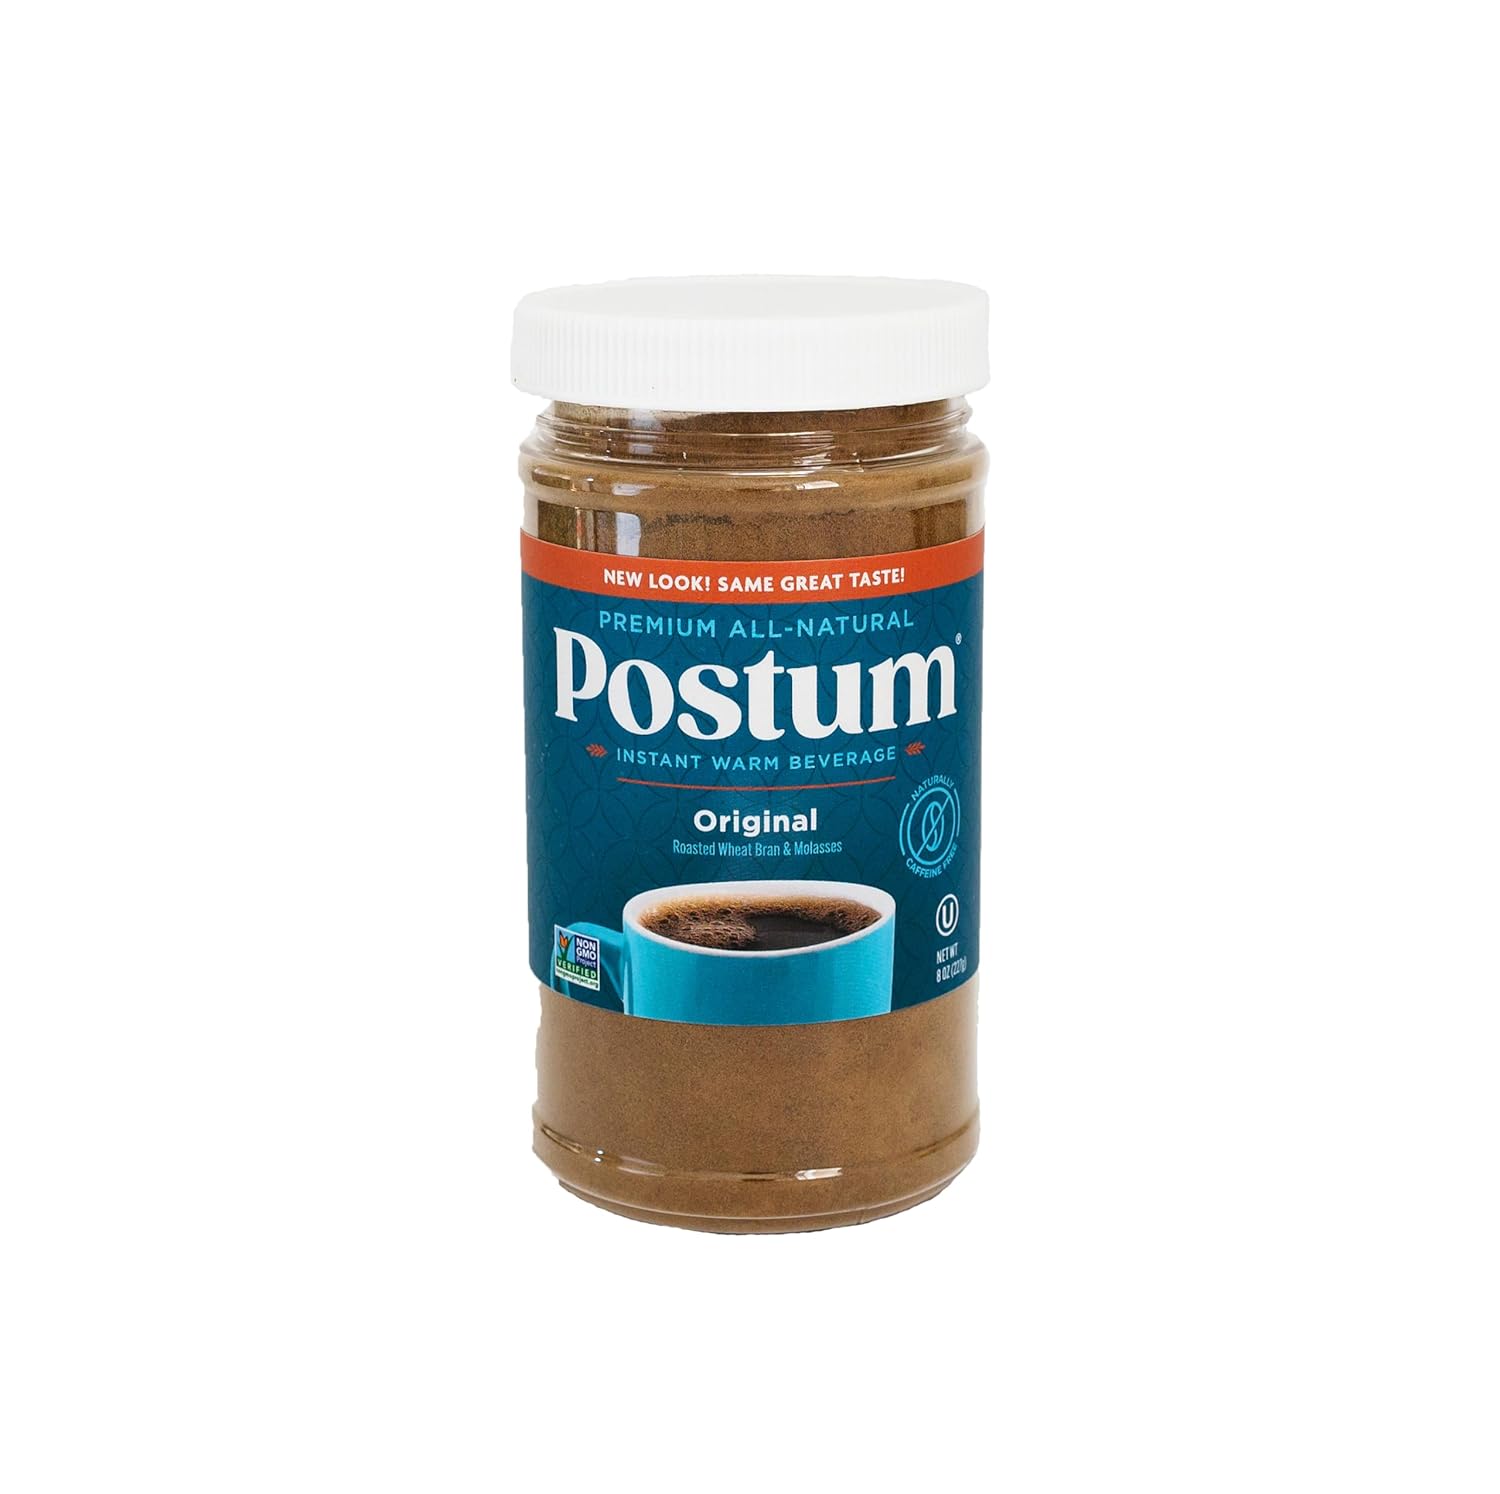 Postum Wheat Bran & Molasses Coffee Substitute - Natural Blend Coffee Alternative (8oz) - Tasty, Rich, Healthy Coffee Alternative Caffeine Free for Breakfast, Gourmet & Pantry Pack